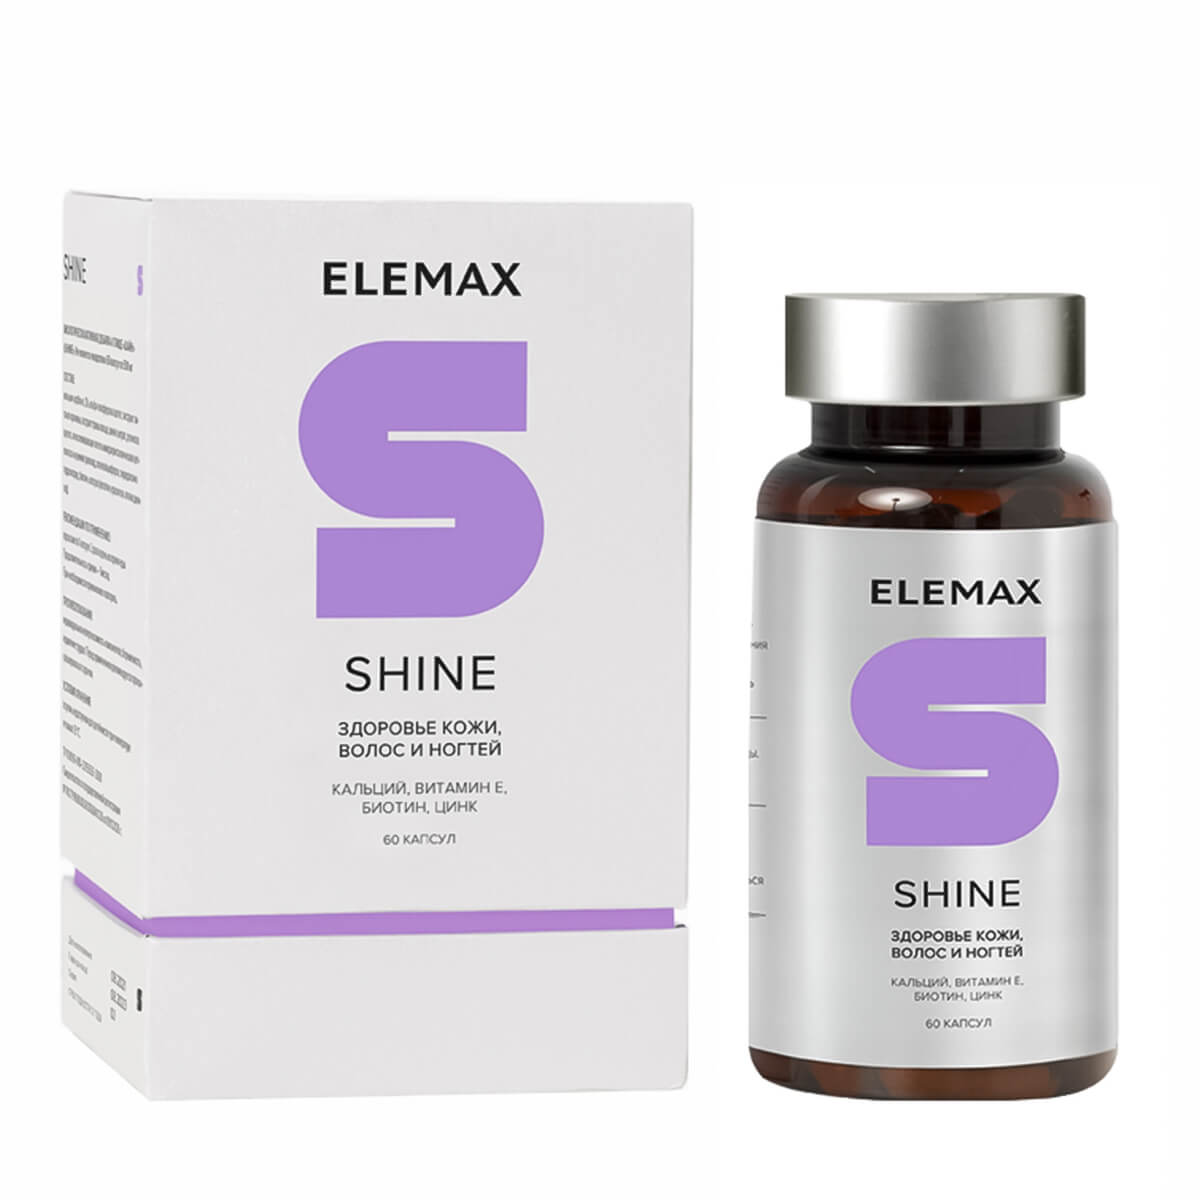 Биологически активная добавка к пище "Шайн" ("Shine"), капсулы 60 шт по 500 мг, Elemax Биологически активная добавка к пище "Шайн" ("Shine"), капсулы 60 шт по 500 мг, - фото 1